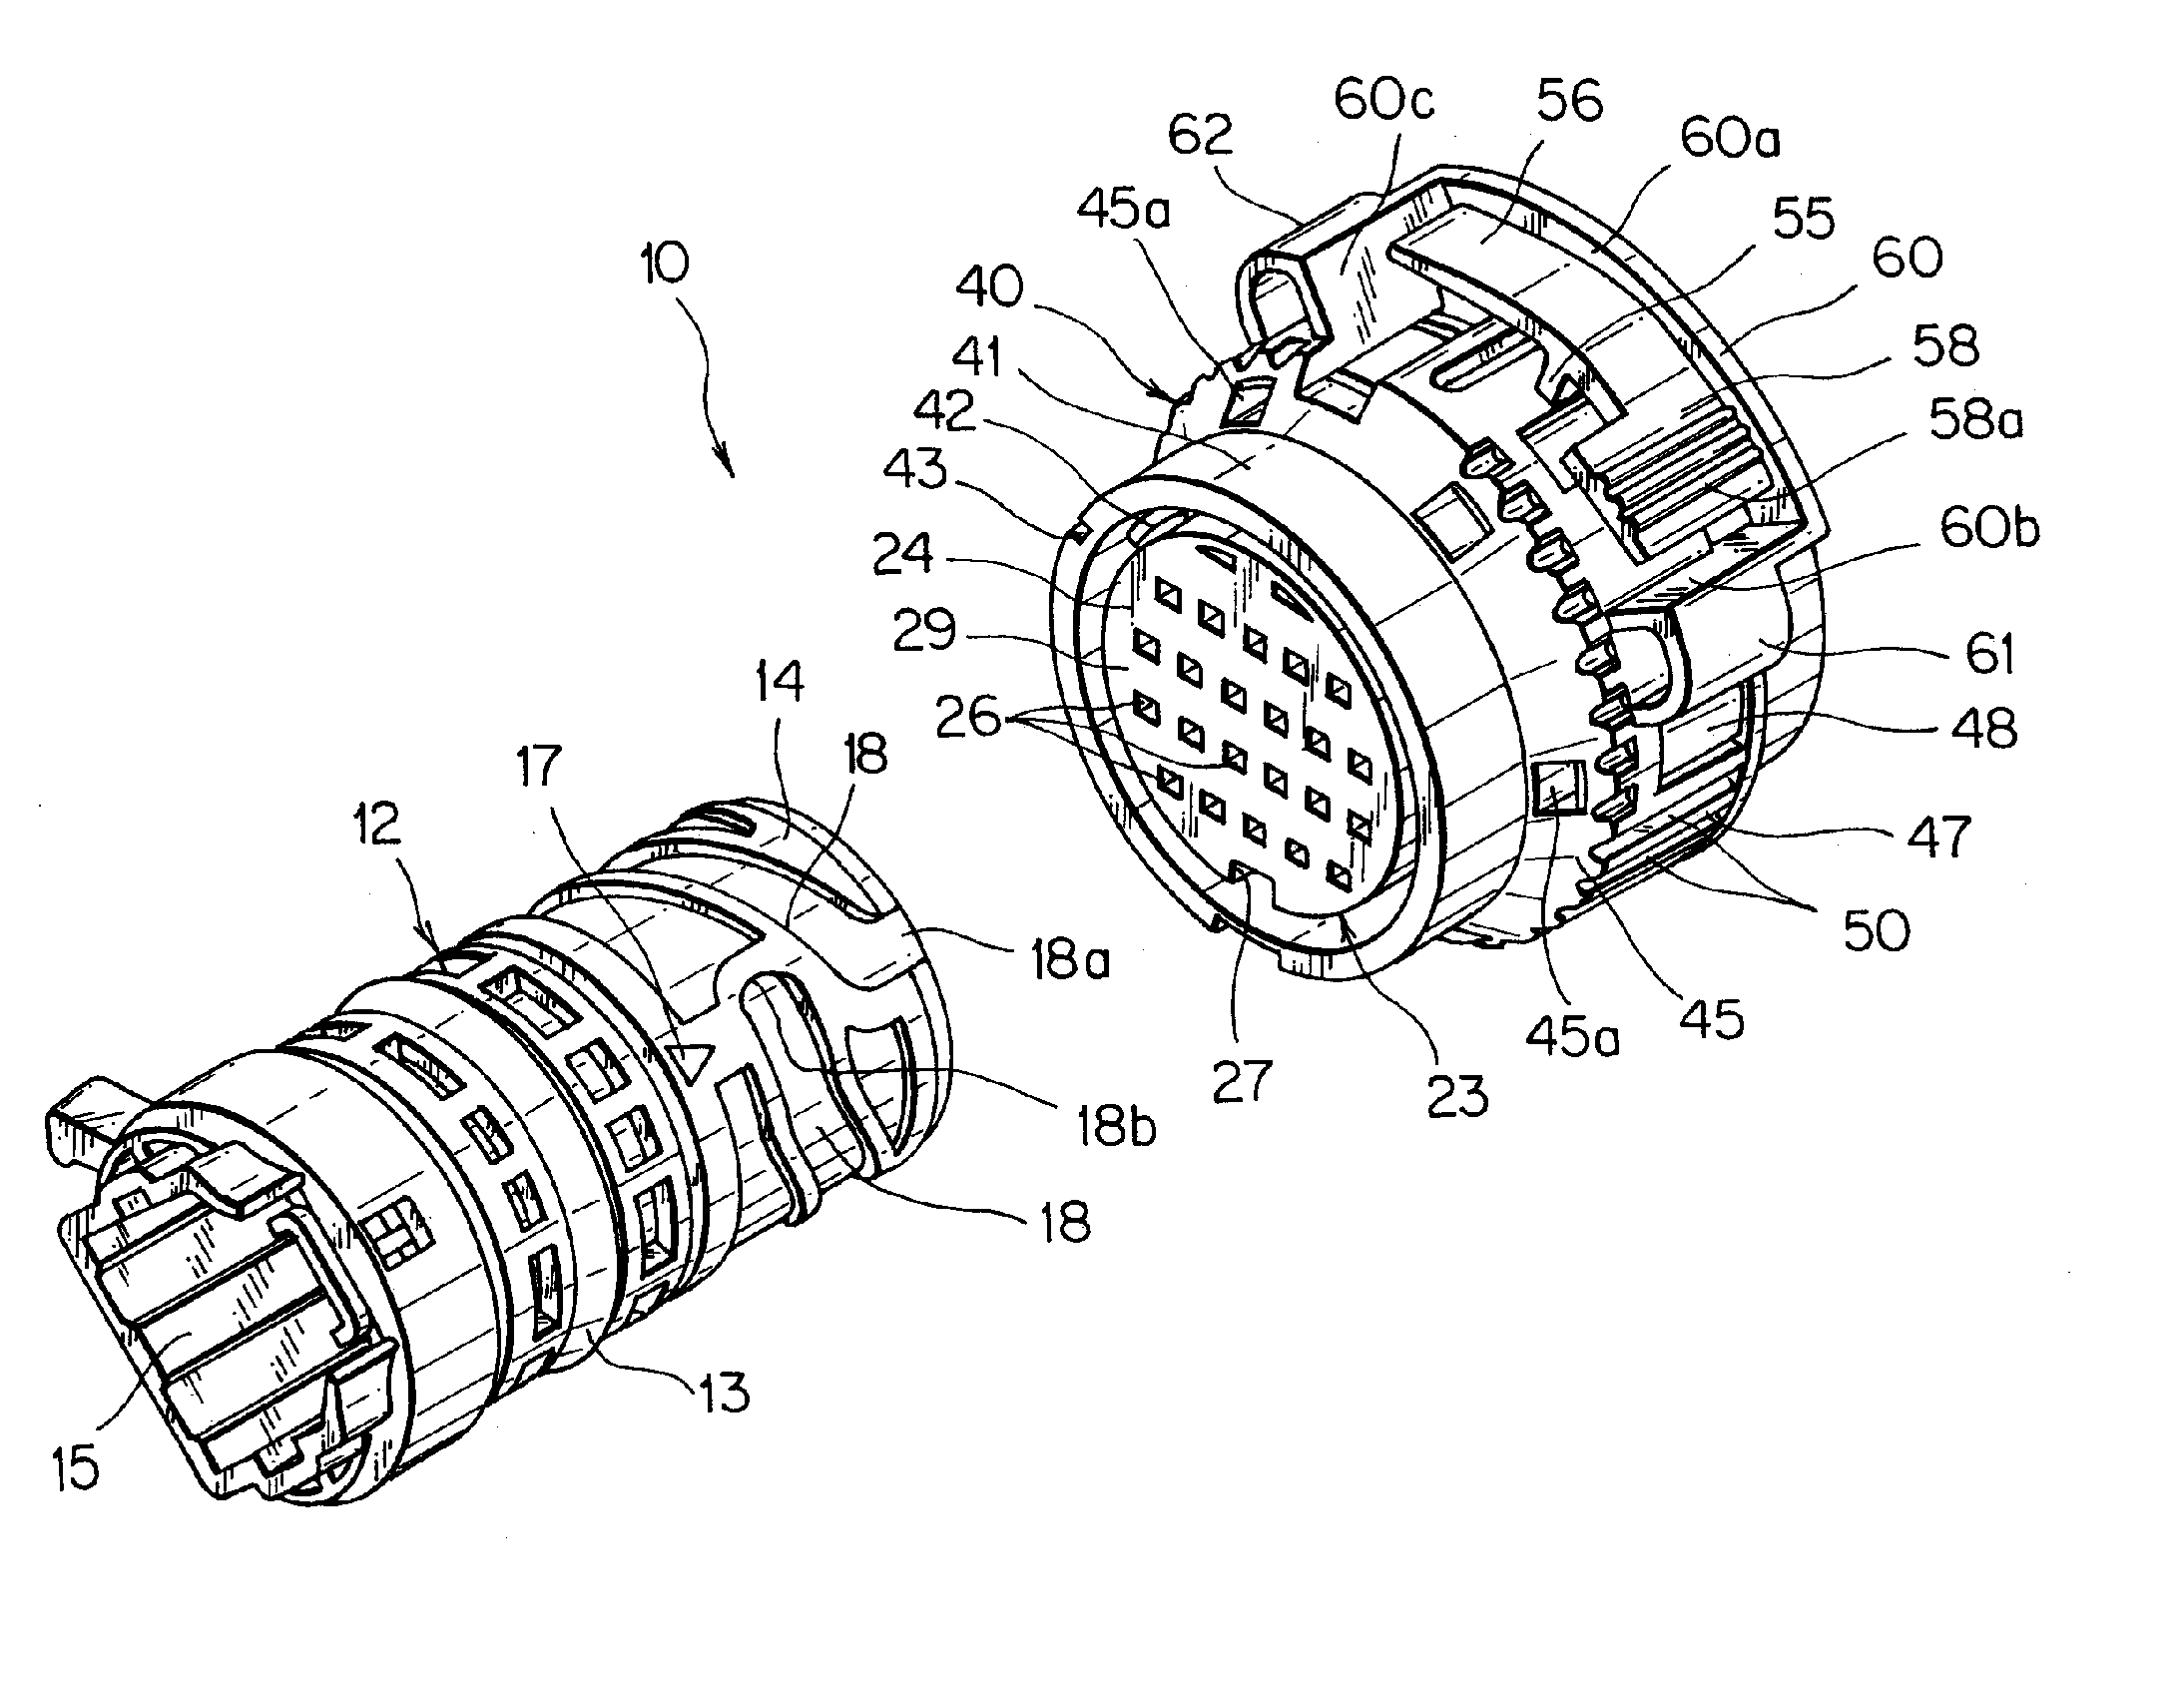 Circular connector assembly